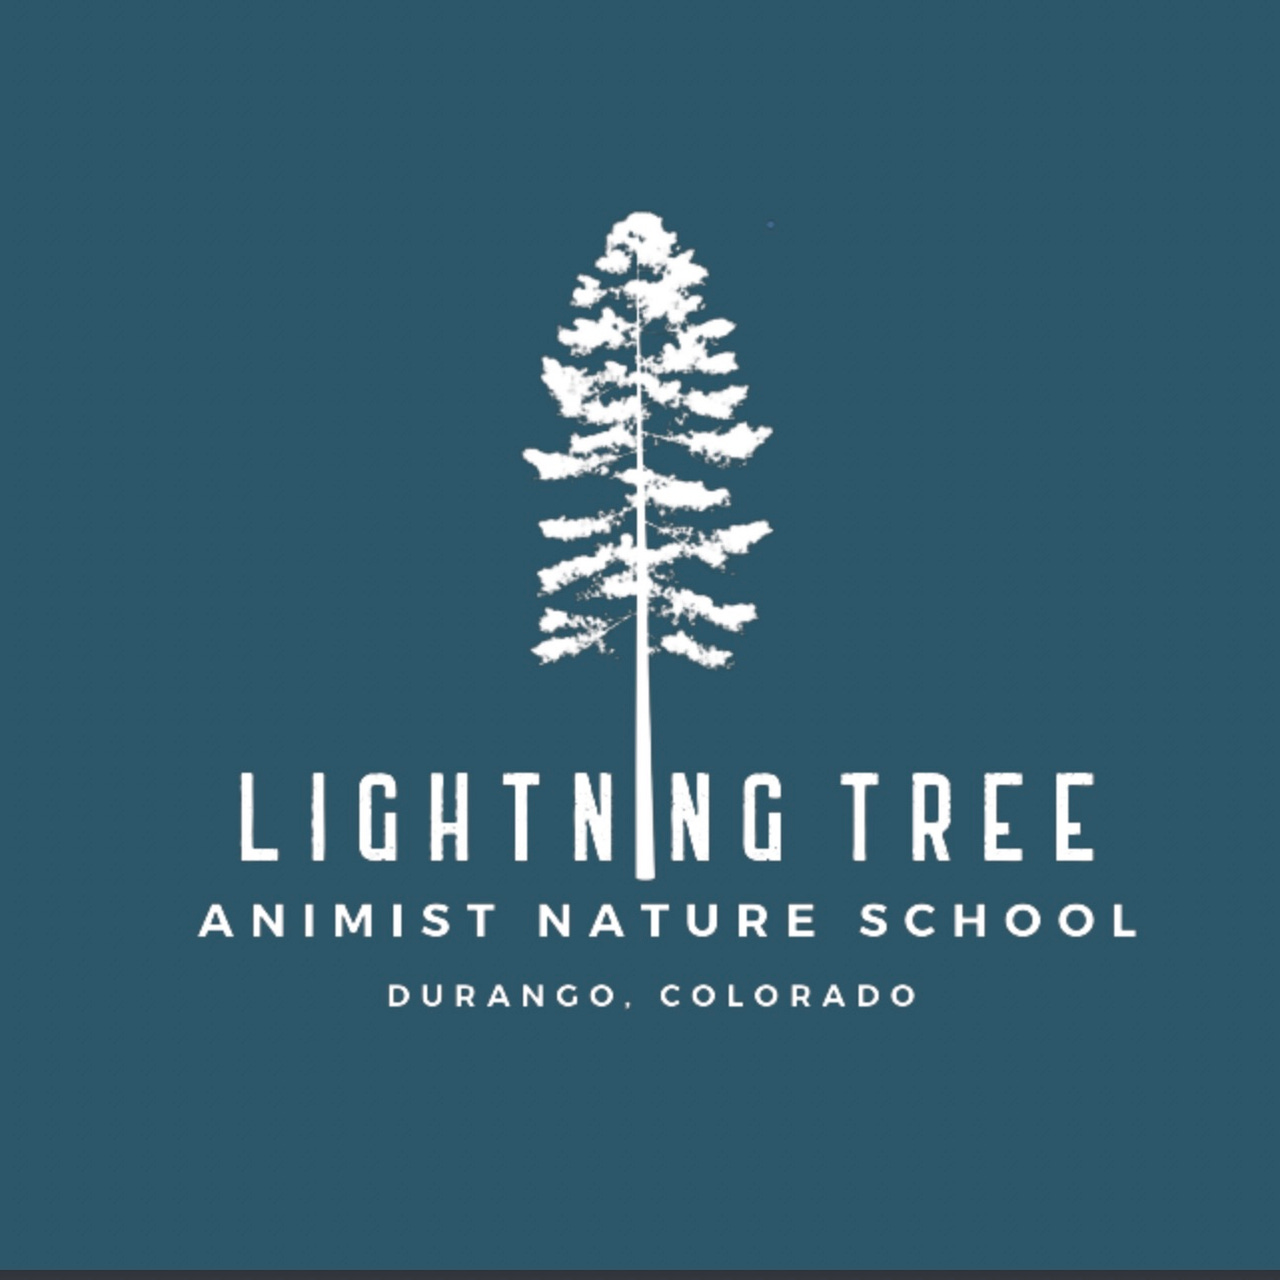 Branches: Lightning Tree Animist Nature School's Blog